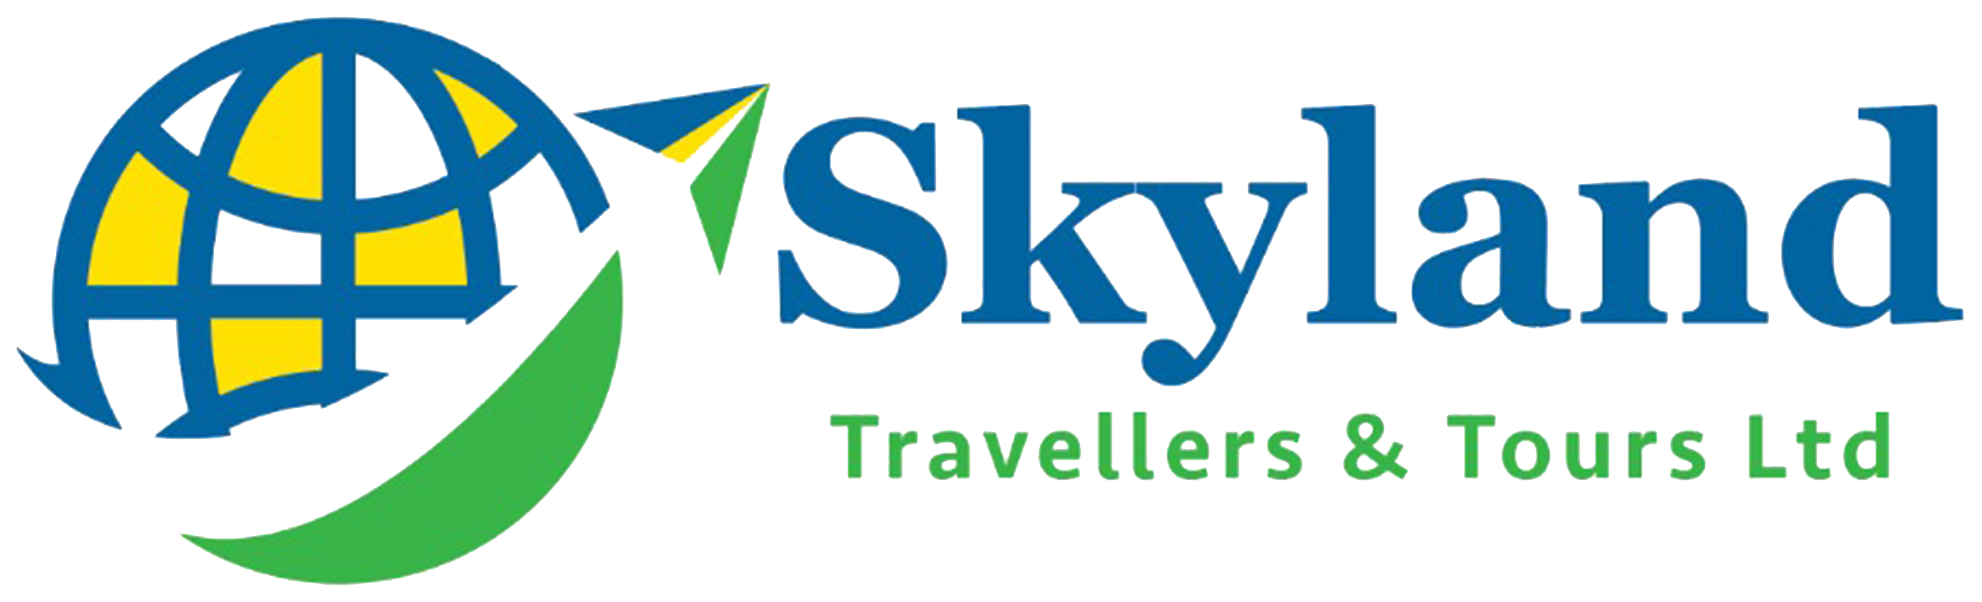 Skyland Travel Tours